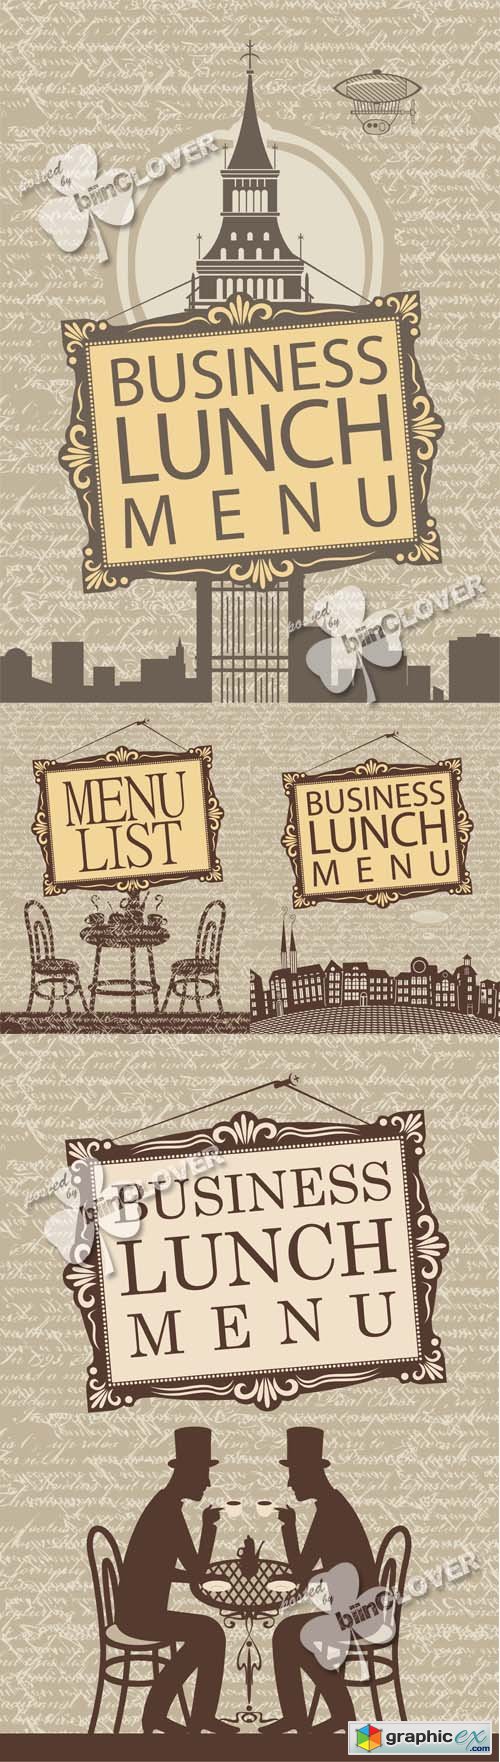 Vector Business lunch menu design 0460